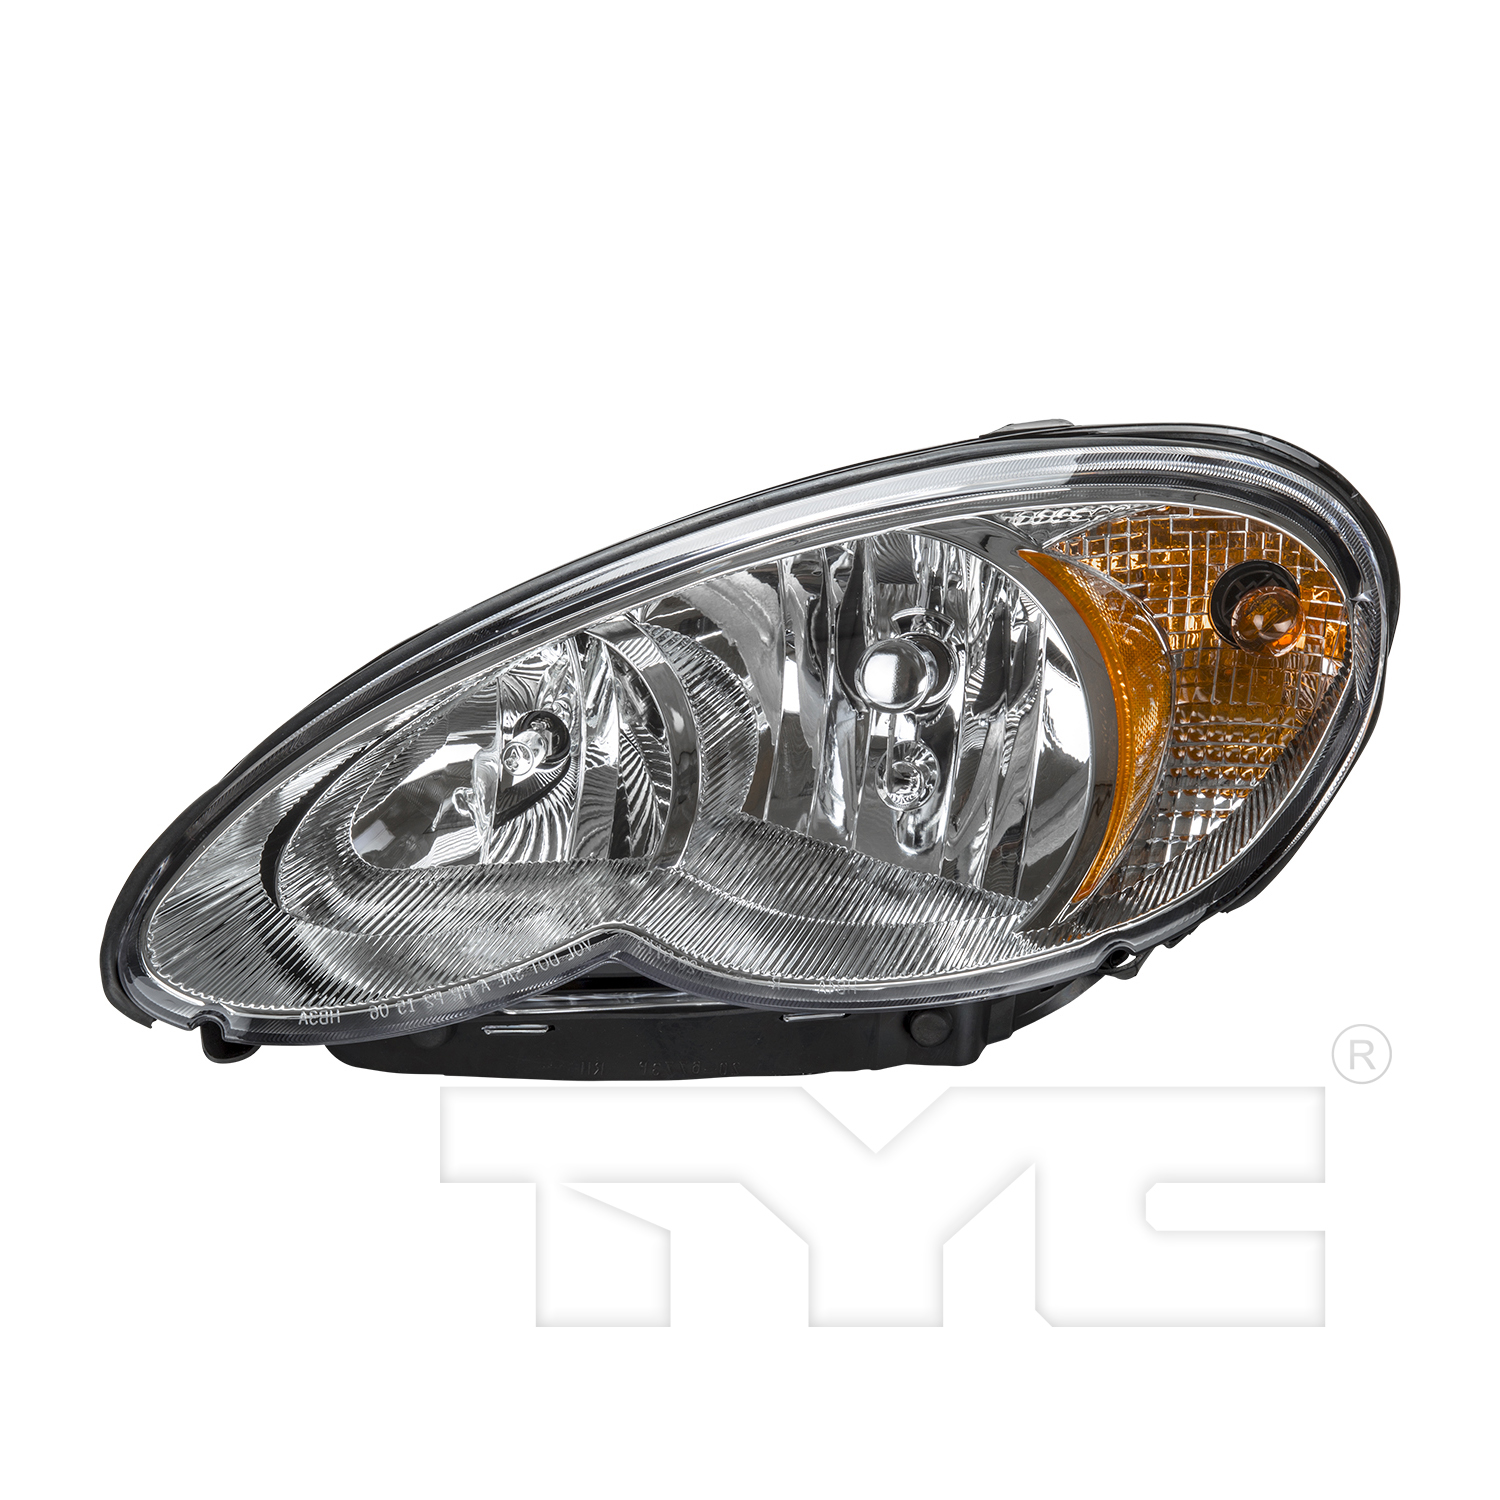 Aftermarket HEADLIGHTS for CHRYSLER - PT CRUISER, PT CRUISER,06-10,LT Headlamp assy composite